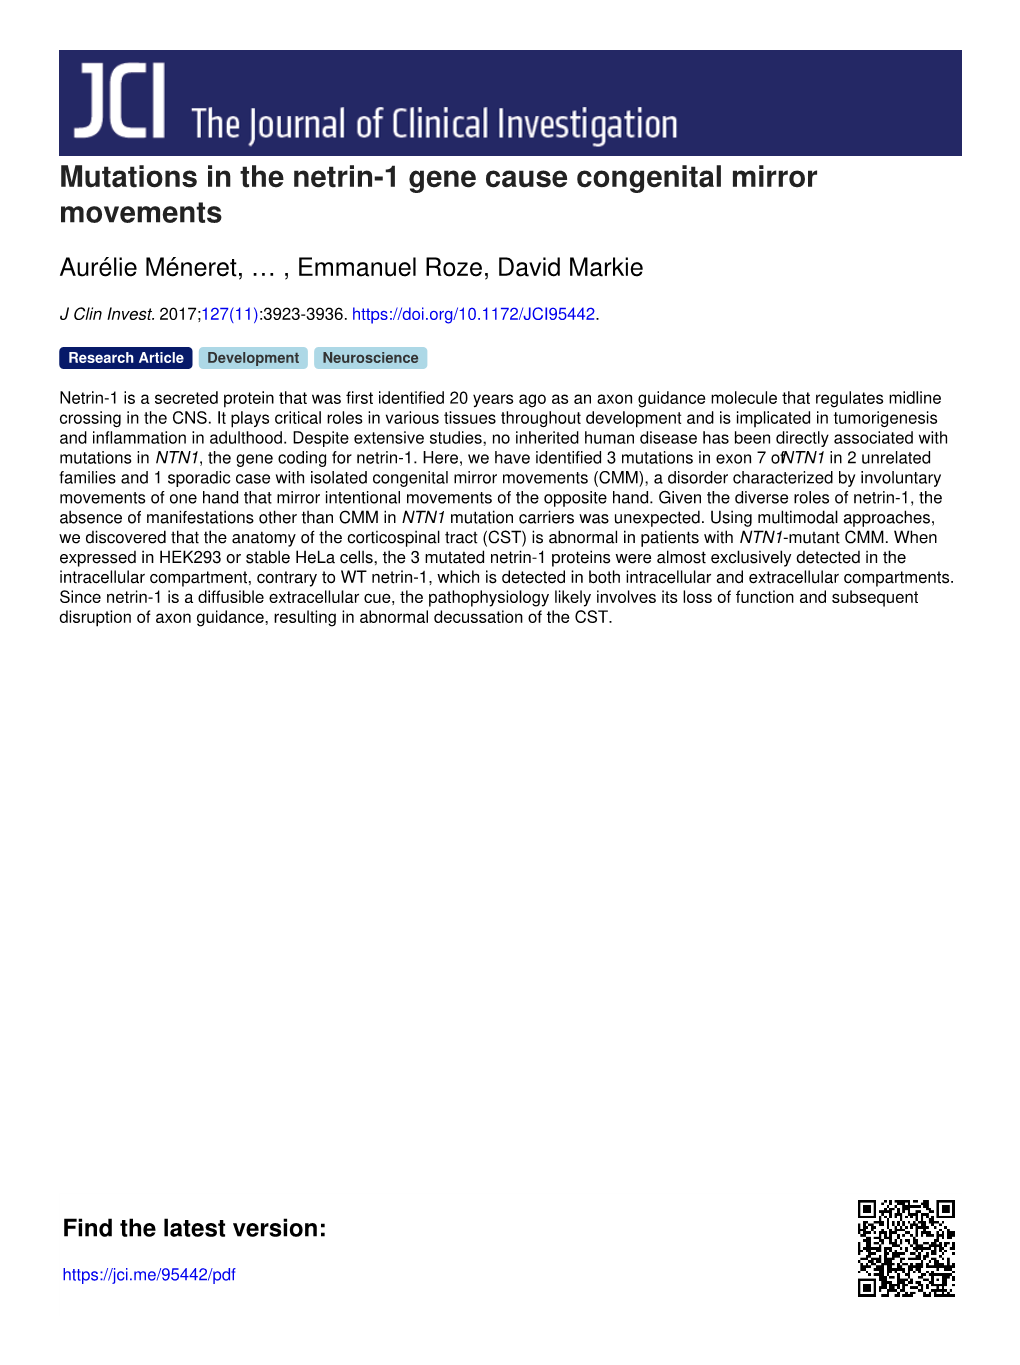 Mutations in the Netrin-1 Gene Cause Congenital Mirror Movements